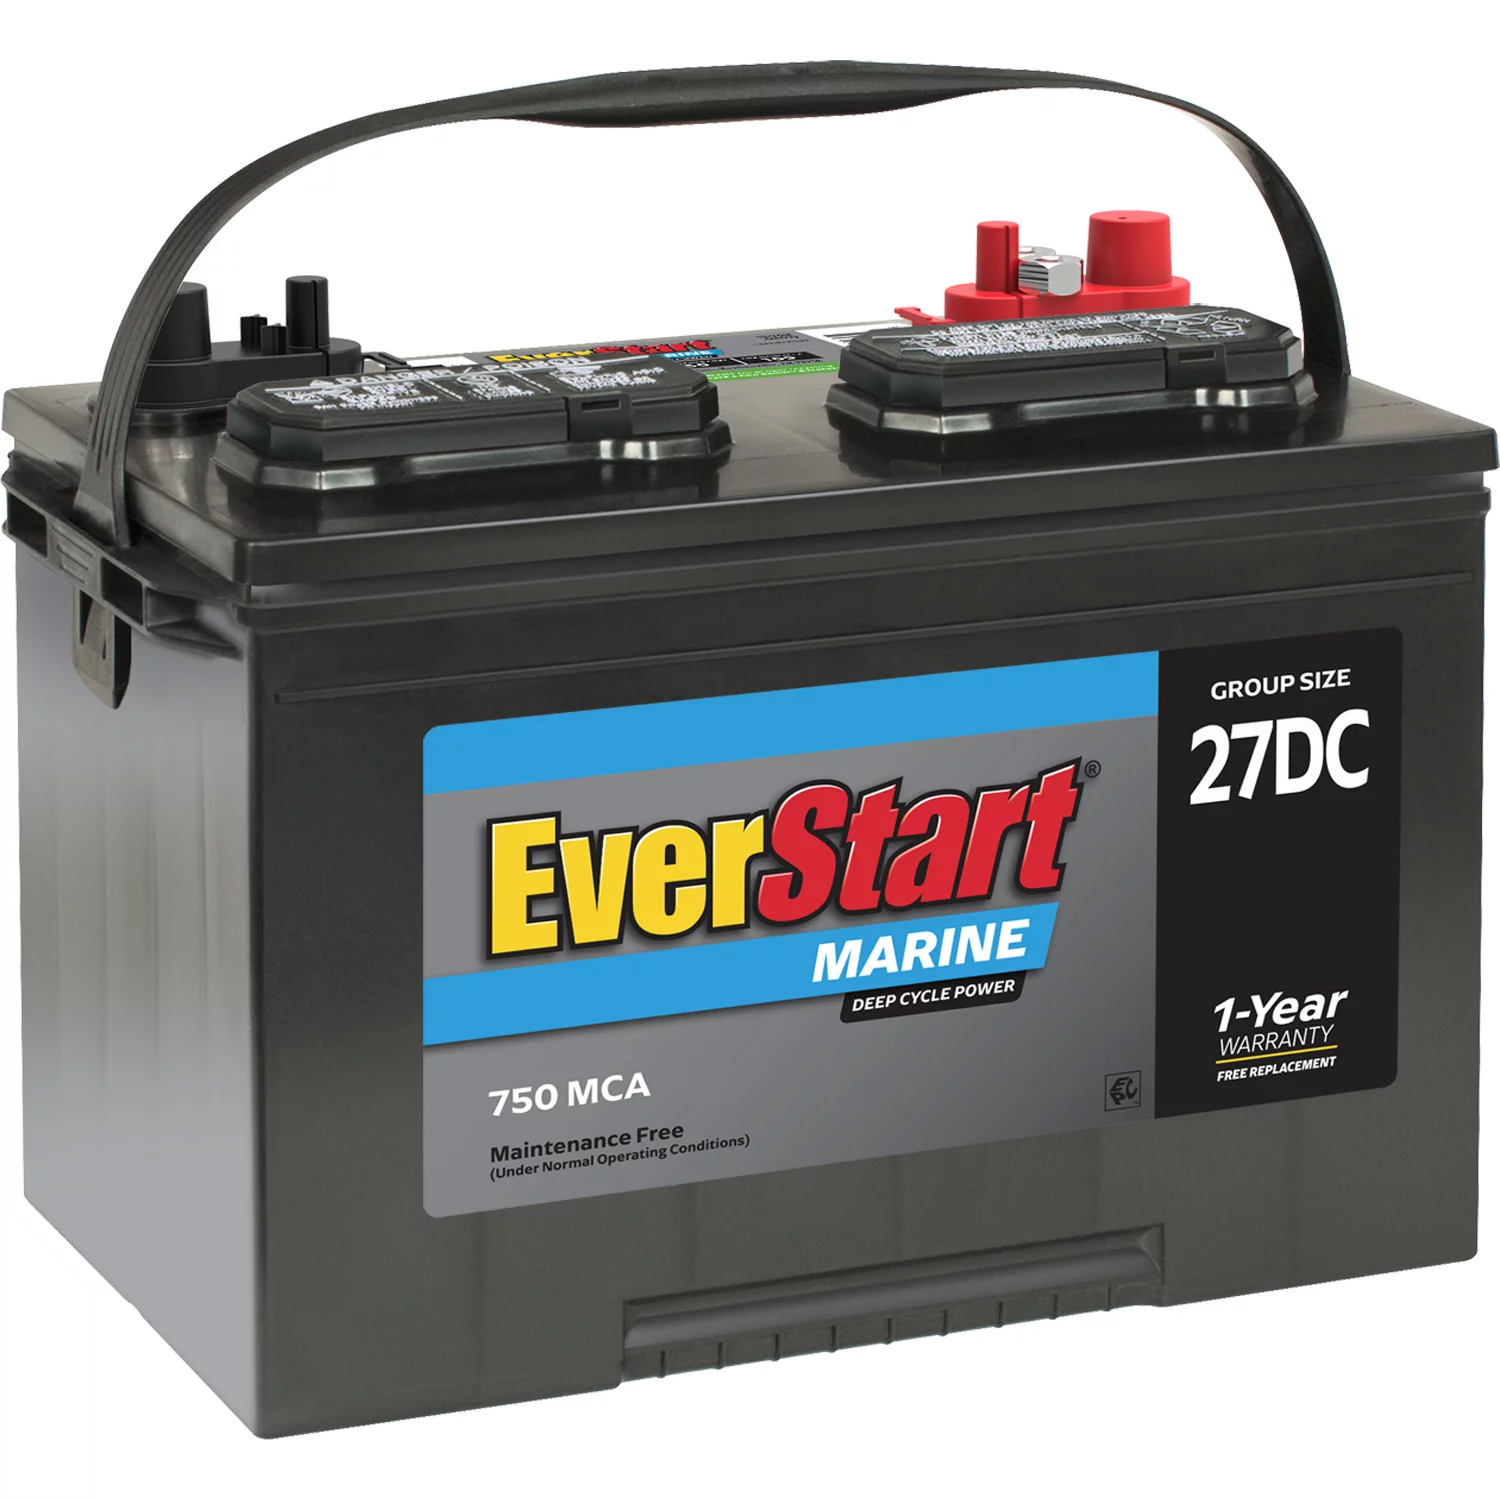 EverStart Lead Acid Marine & RV Deep Cycle Battery, Group Size 27DC 12 Volt, 740 MCA